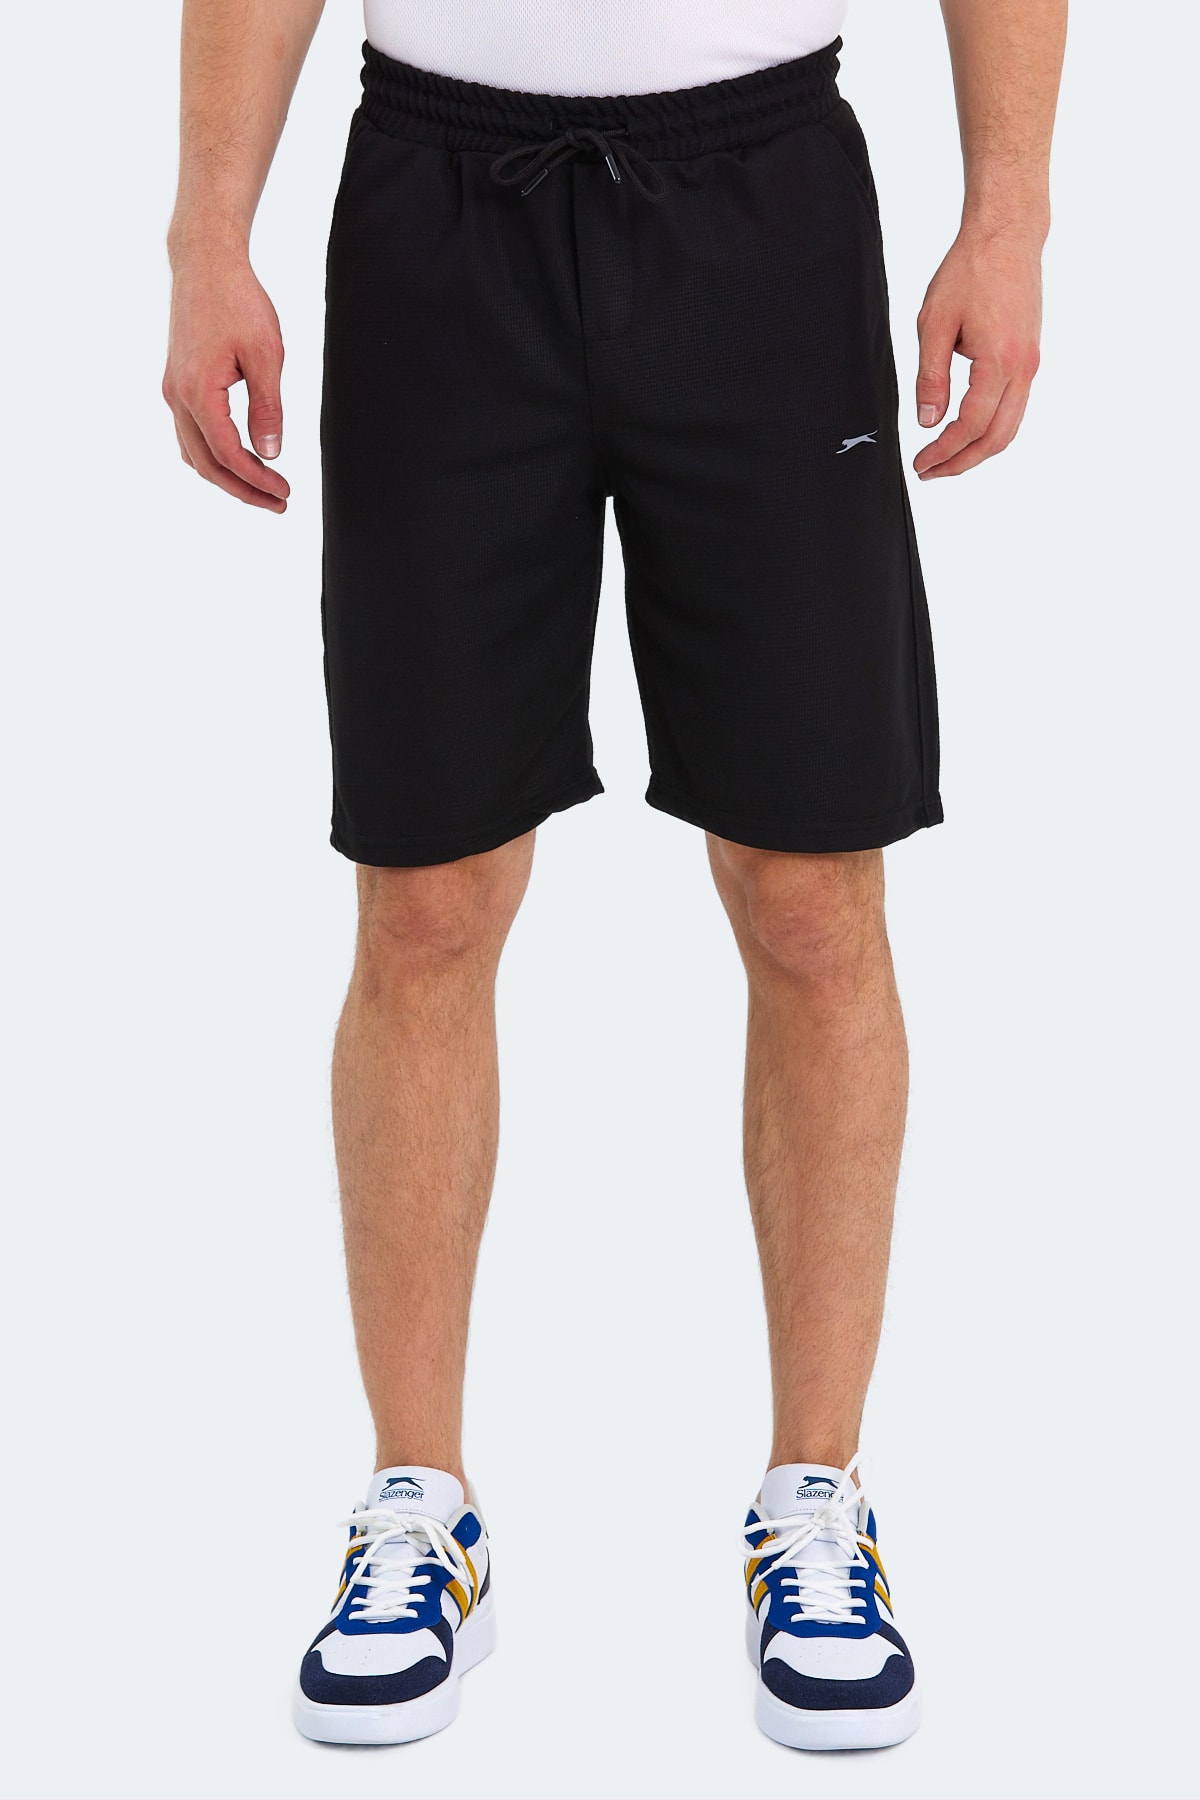 Levně Slazenger Osborn Men's Shorts Black